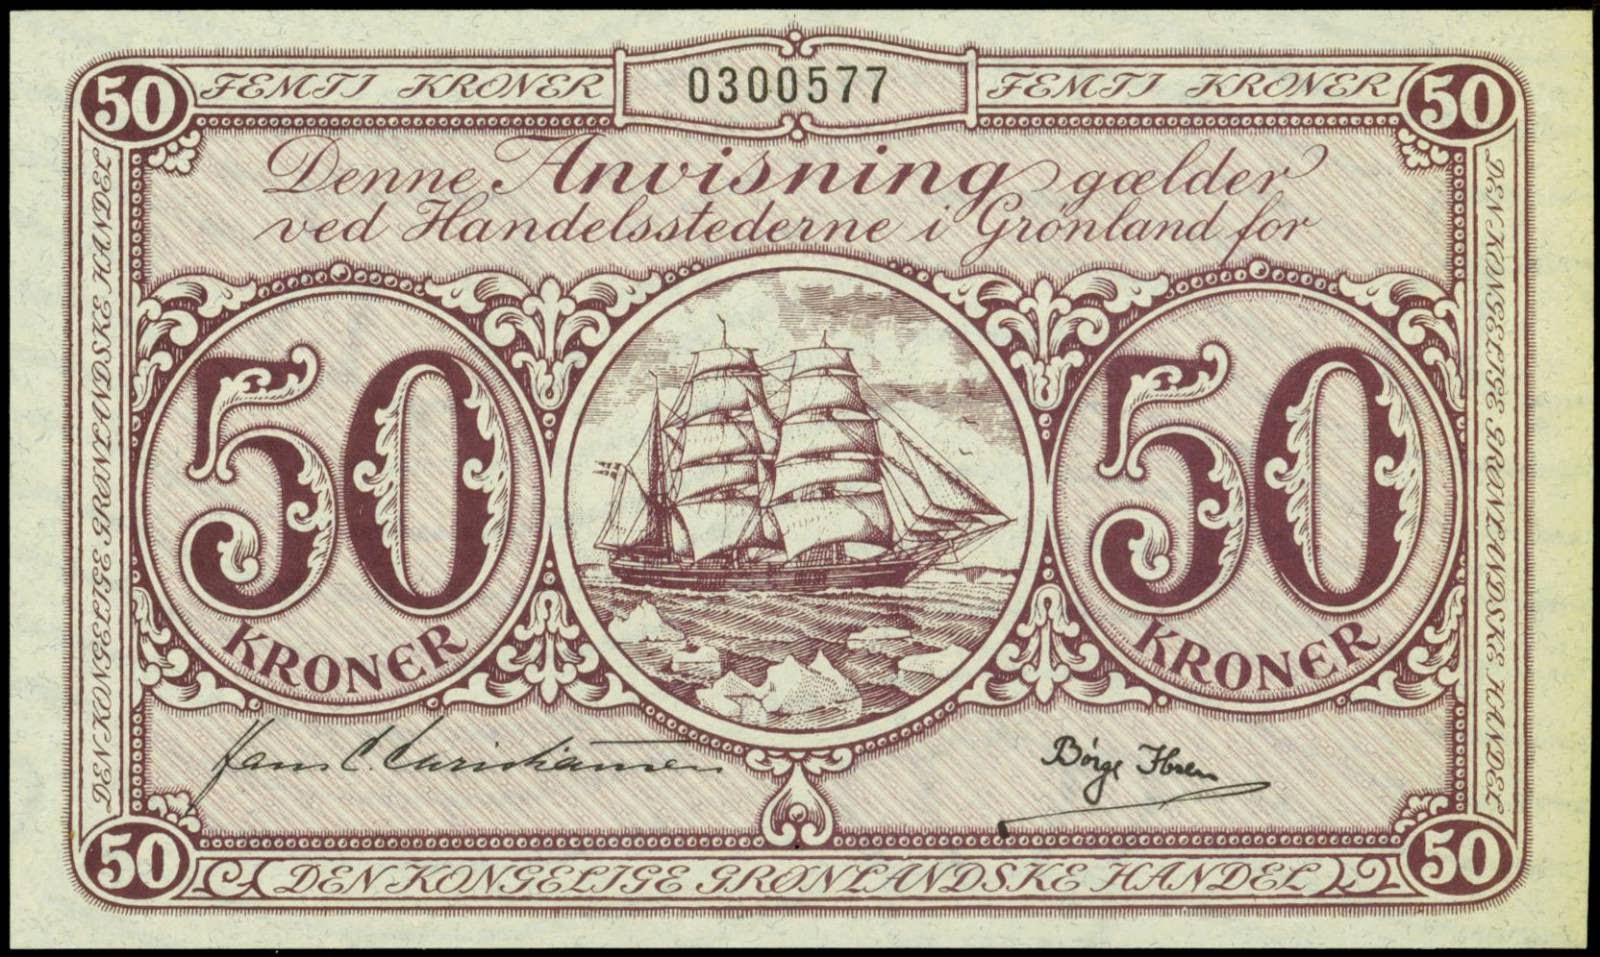 Greenland banknotes 50 Kroner note ship